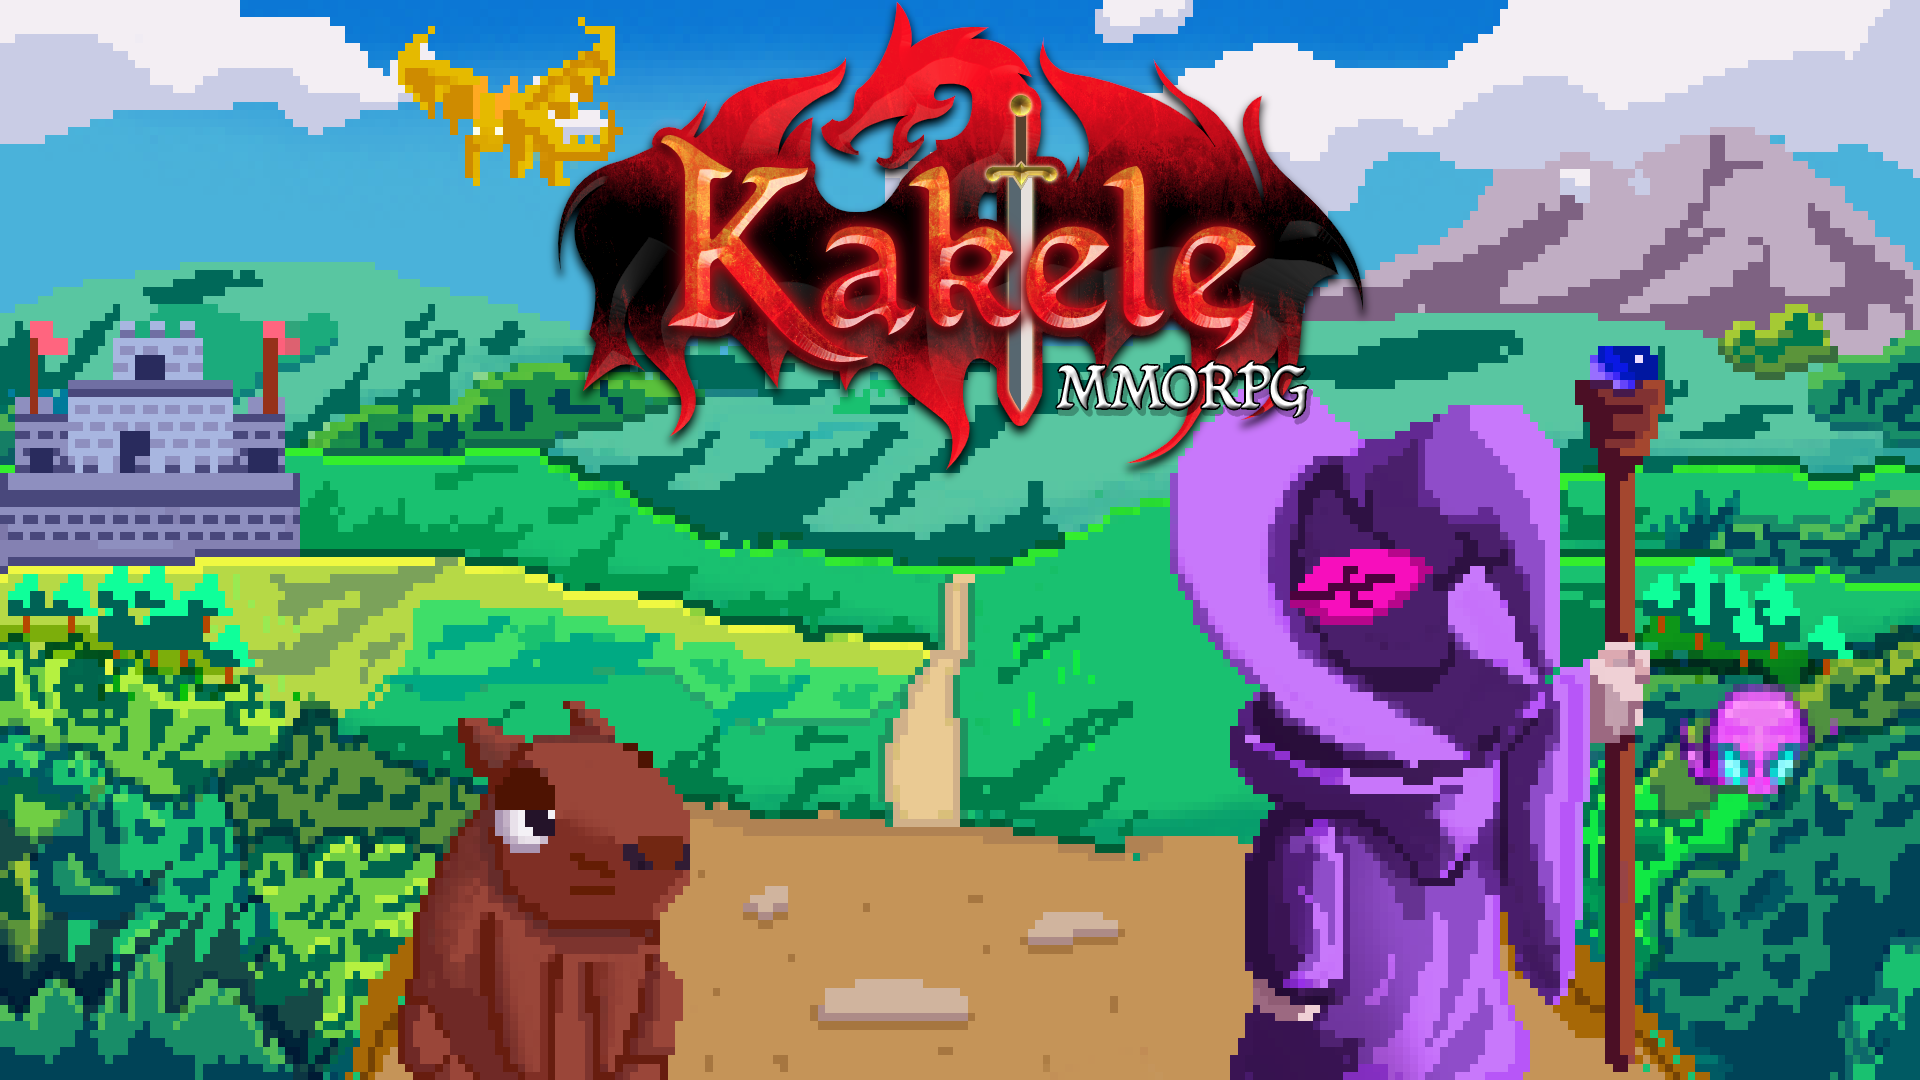 instal the last version for windows Kakele Online - MMORPG